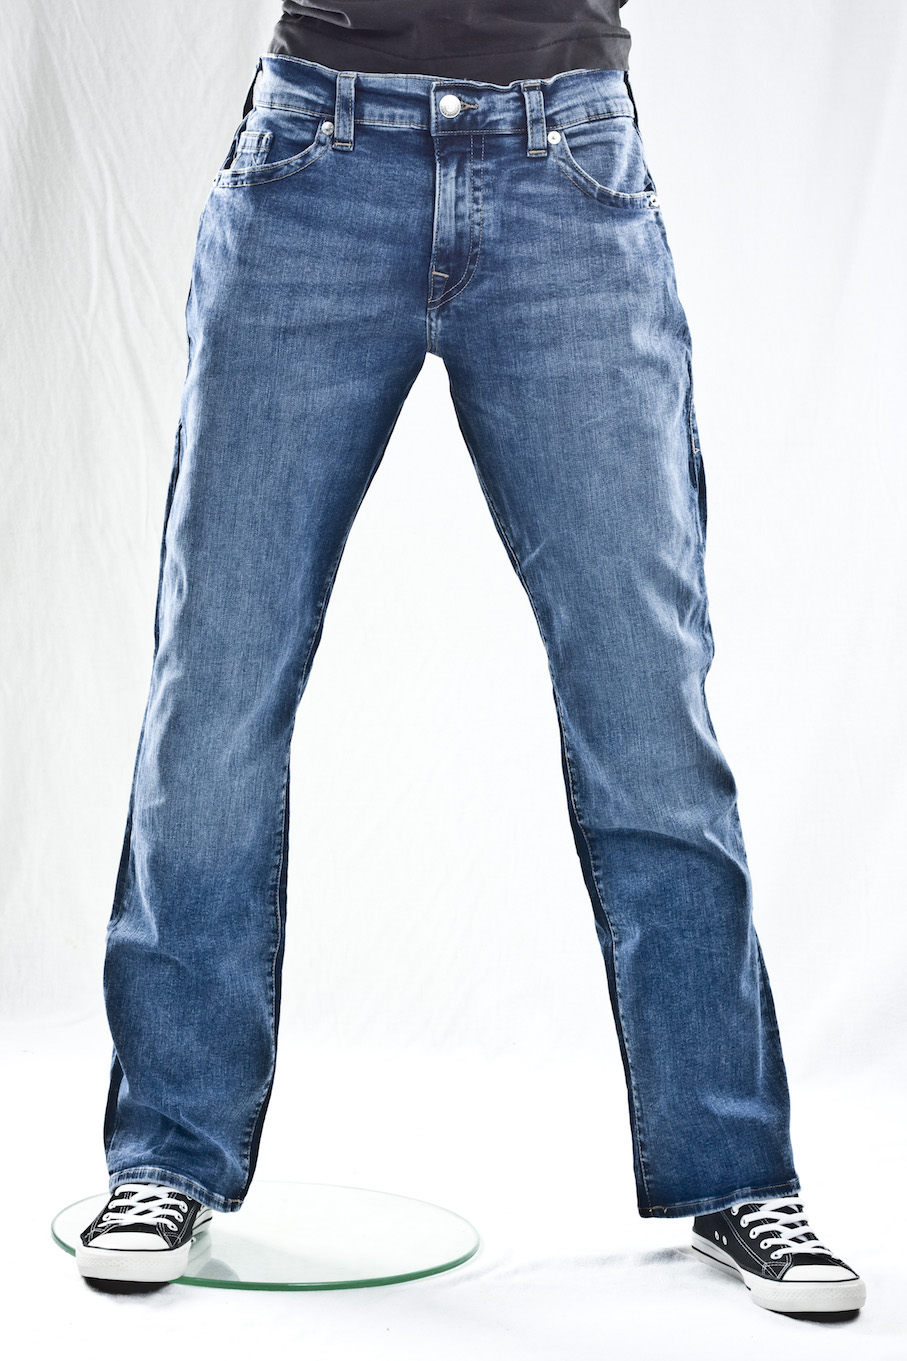 джинсы мужские True Religion Ricky sn straight relax jean широкие прямые